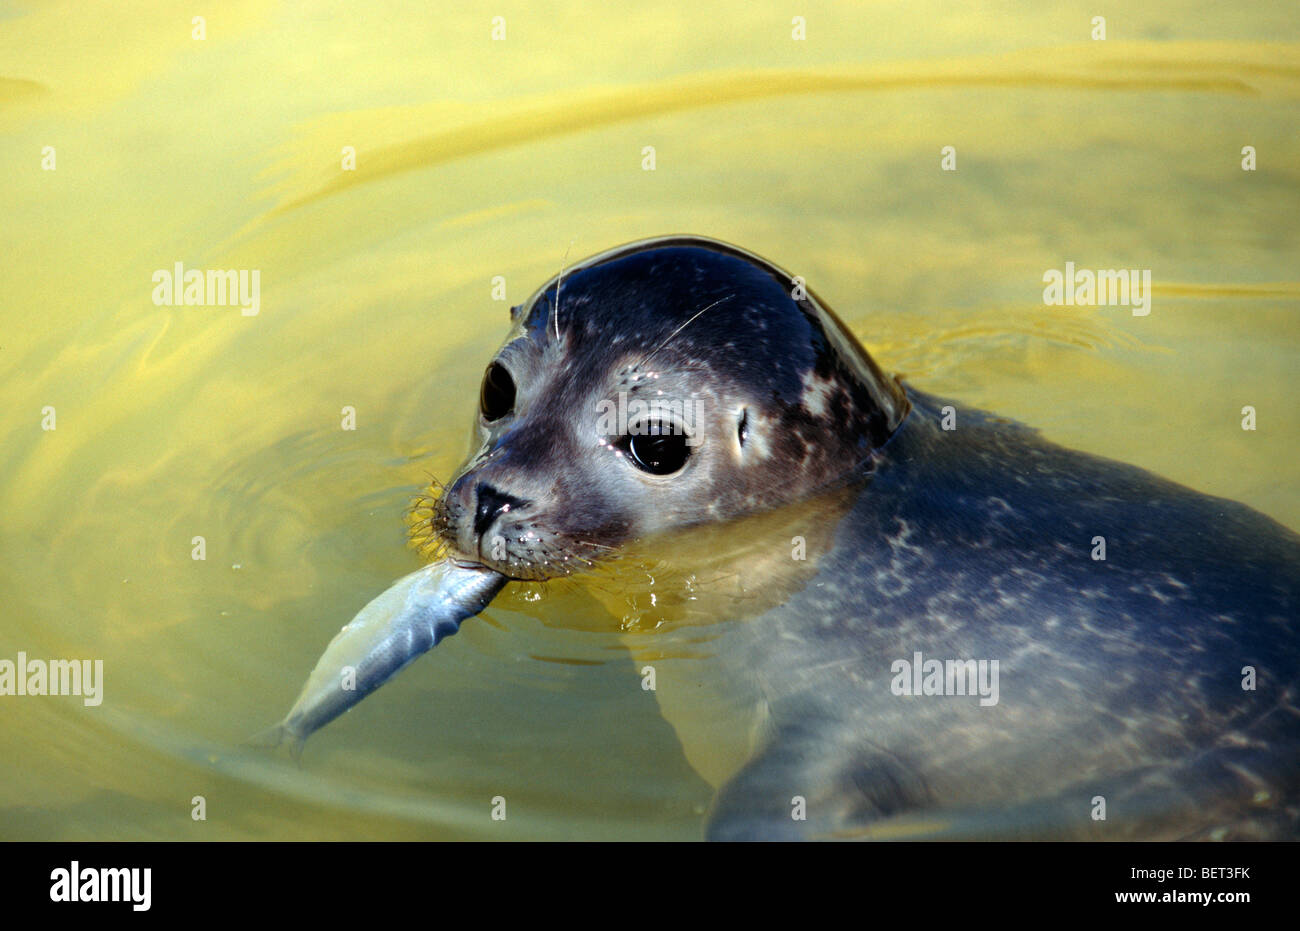 Harbor seal / Common seal (Phoca vitulina) juvenile eating fish, Harbor Seal station Friedrichskoog, Germany Stock Photo